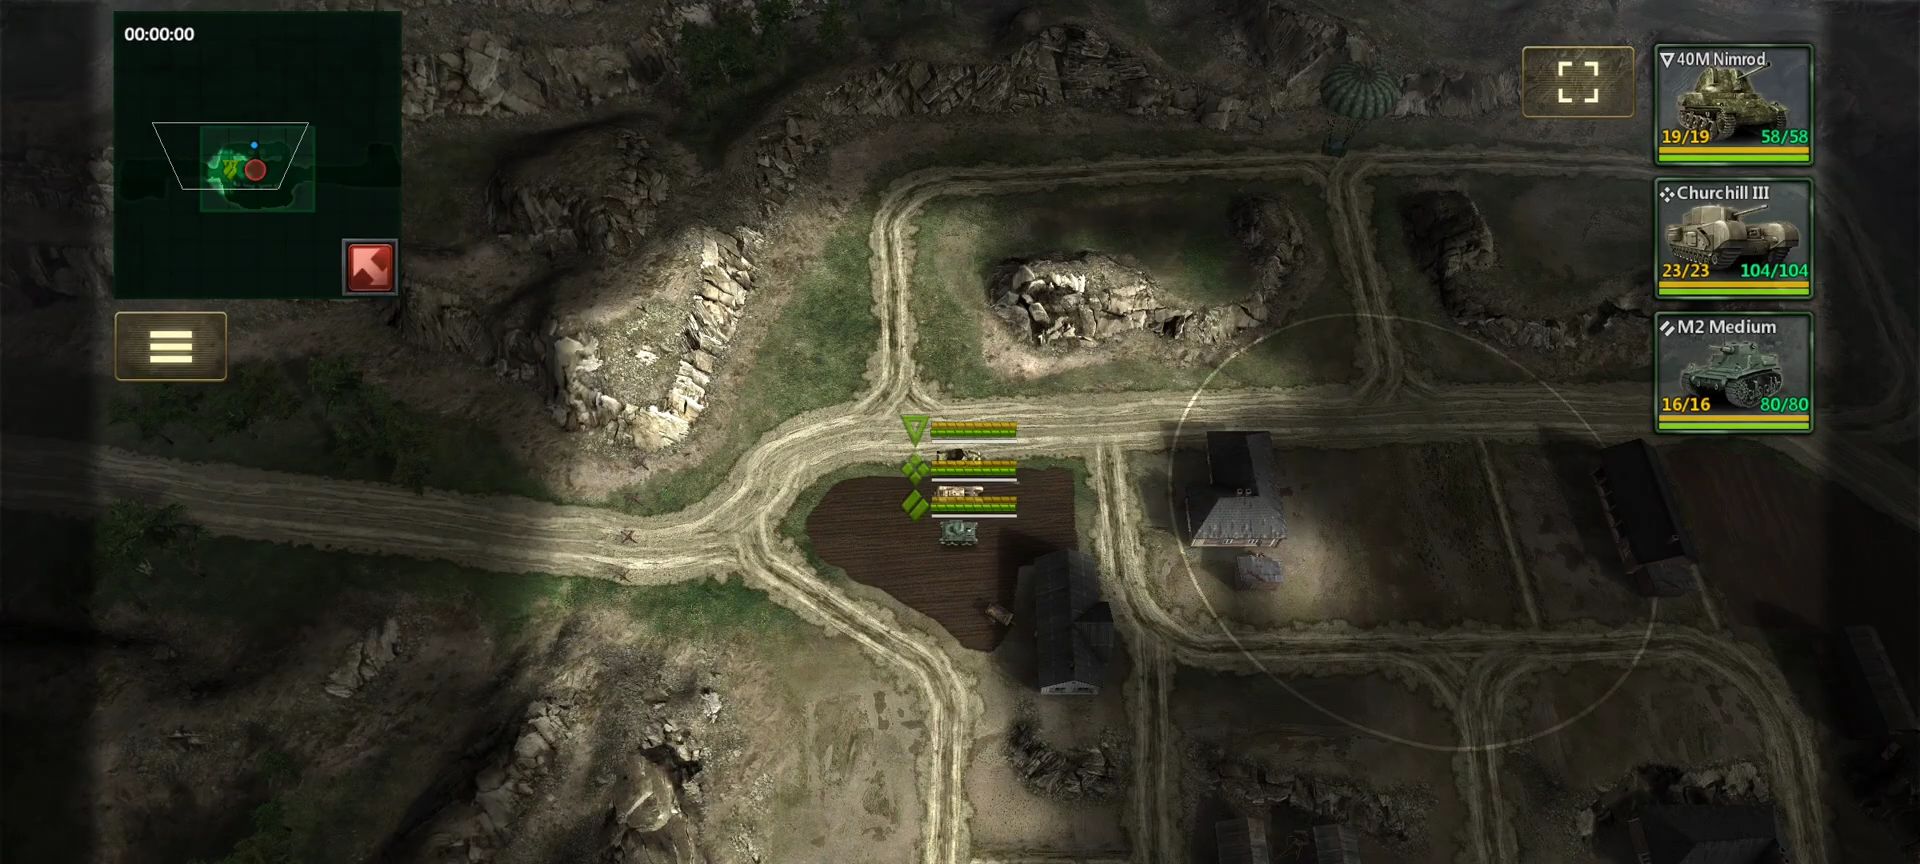 Скачать Tanks Charge: Online PvP Arena: Android Стрелялки игра на телефон и планшет.